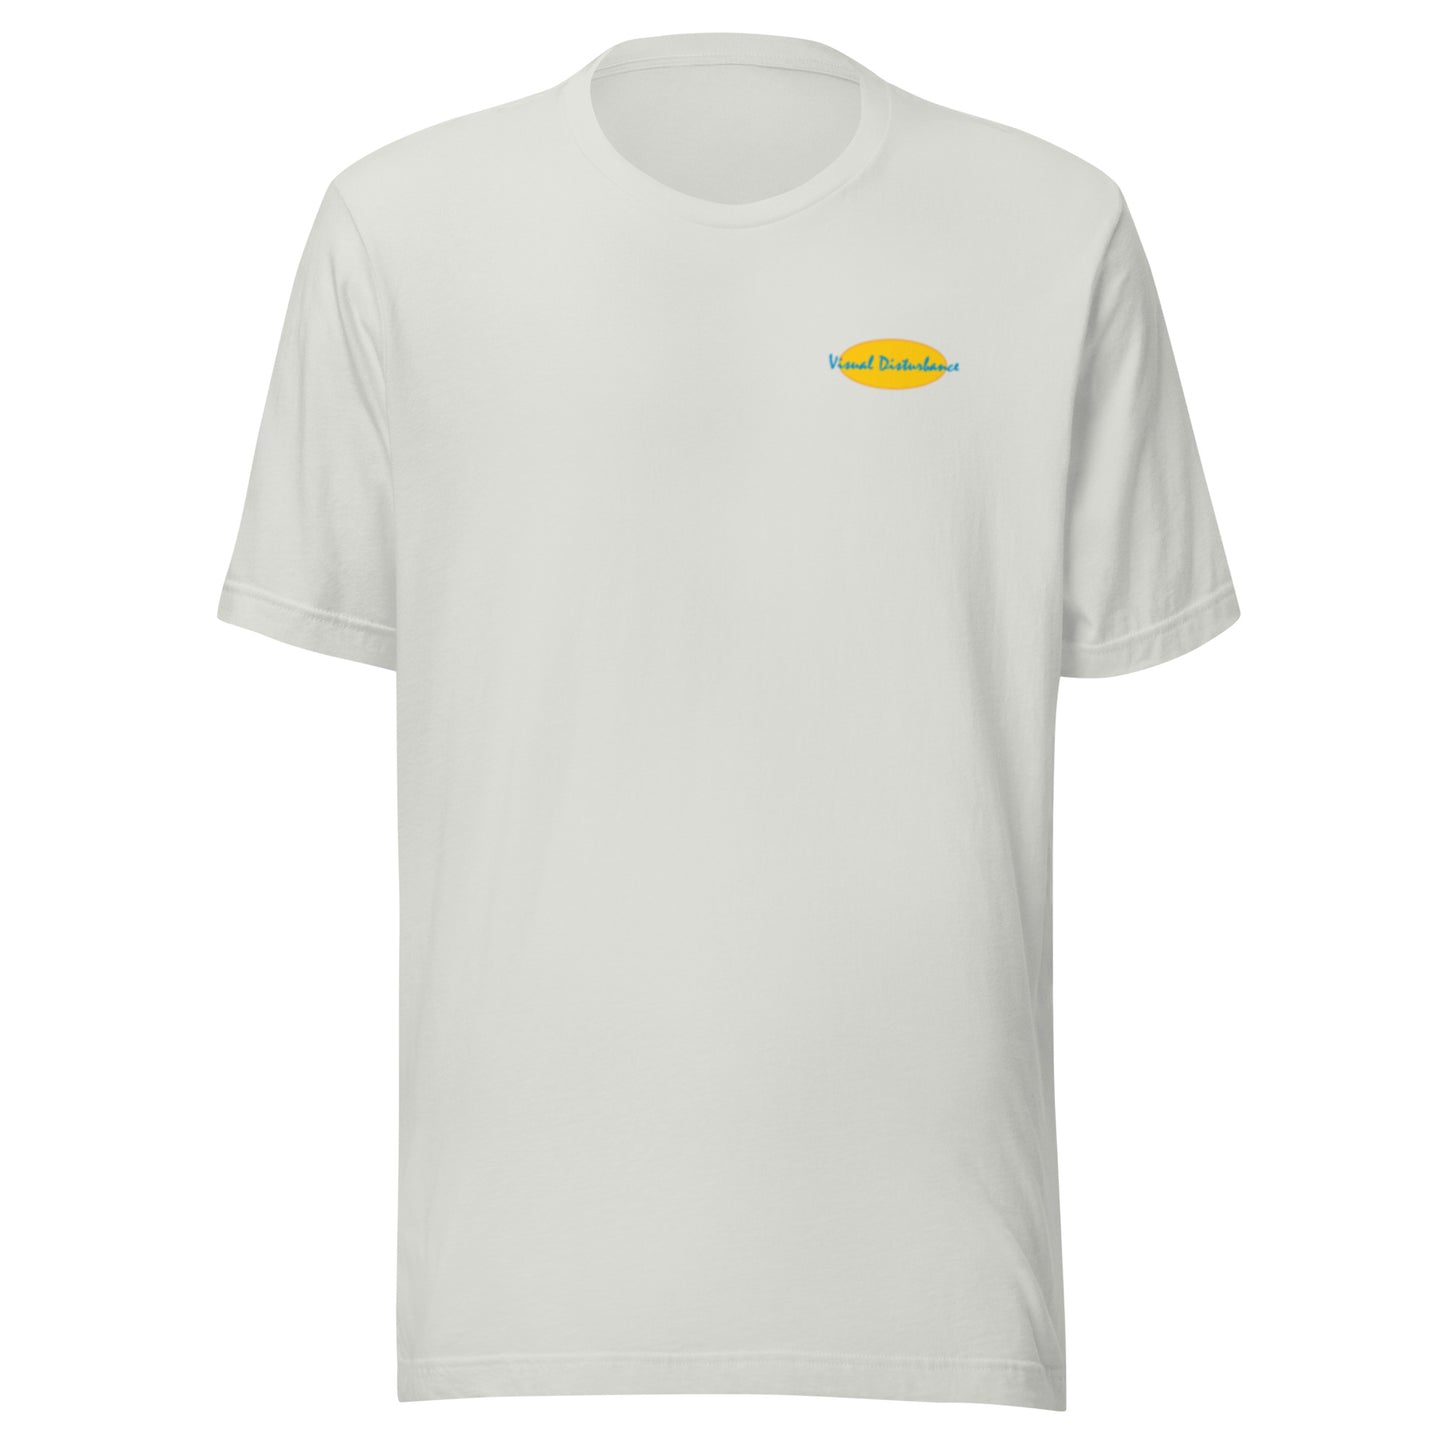 Hurricane in Hollywood Unisex t-shirt